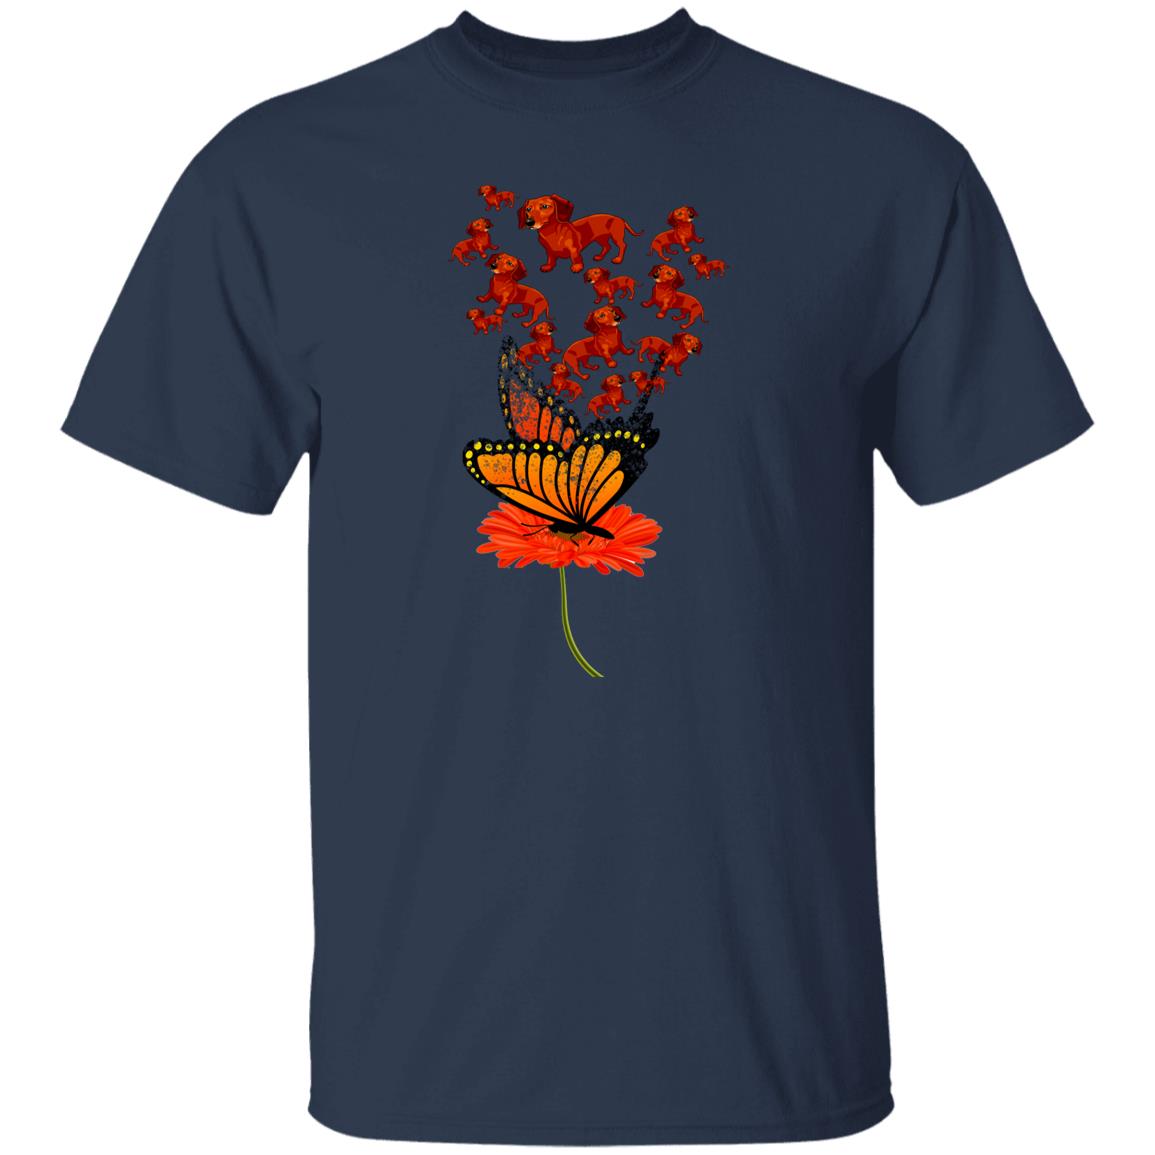 Flower butterfly dogs Unisex t-shirt gift black navy dark heather-Family-Gift-Planet